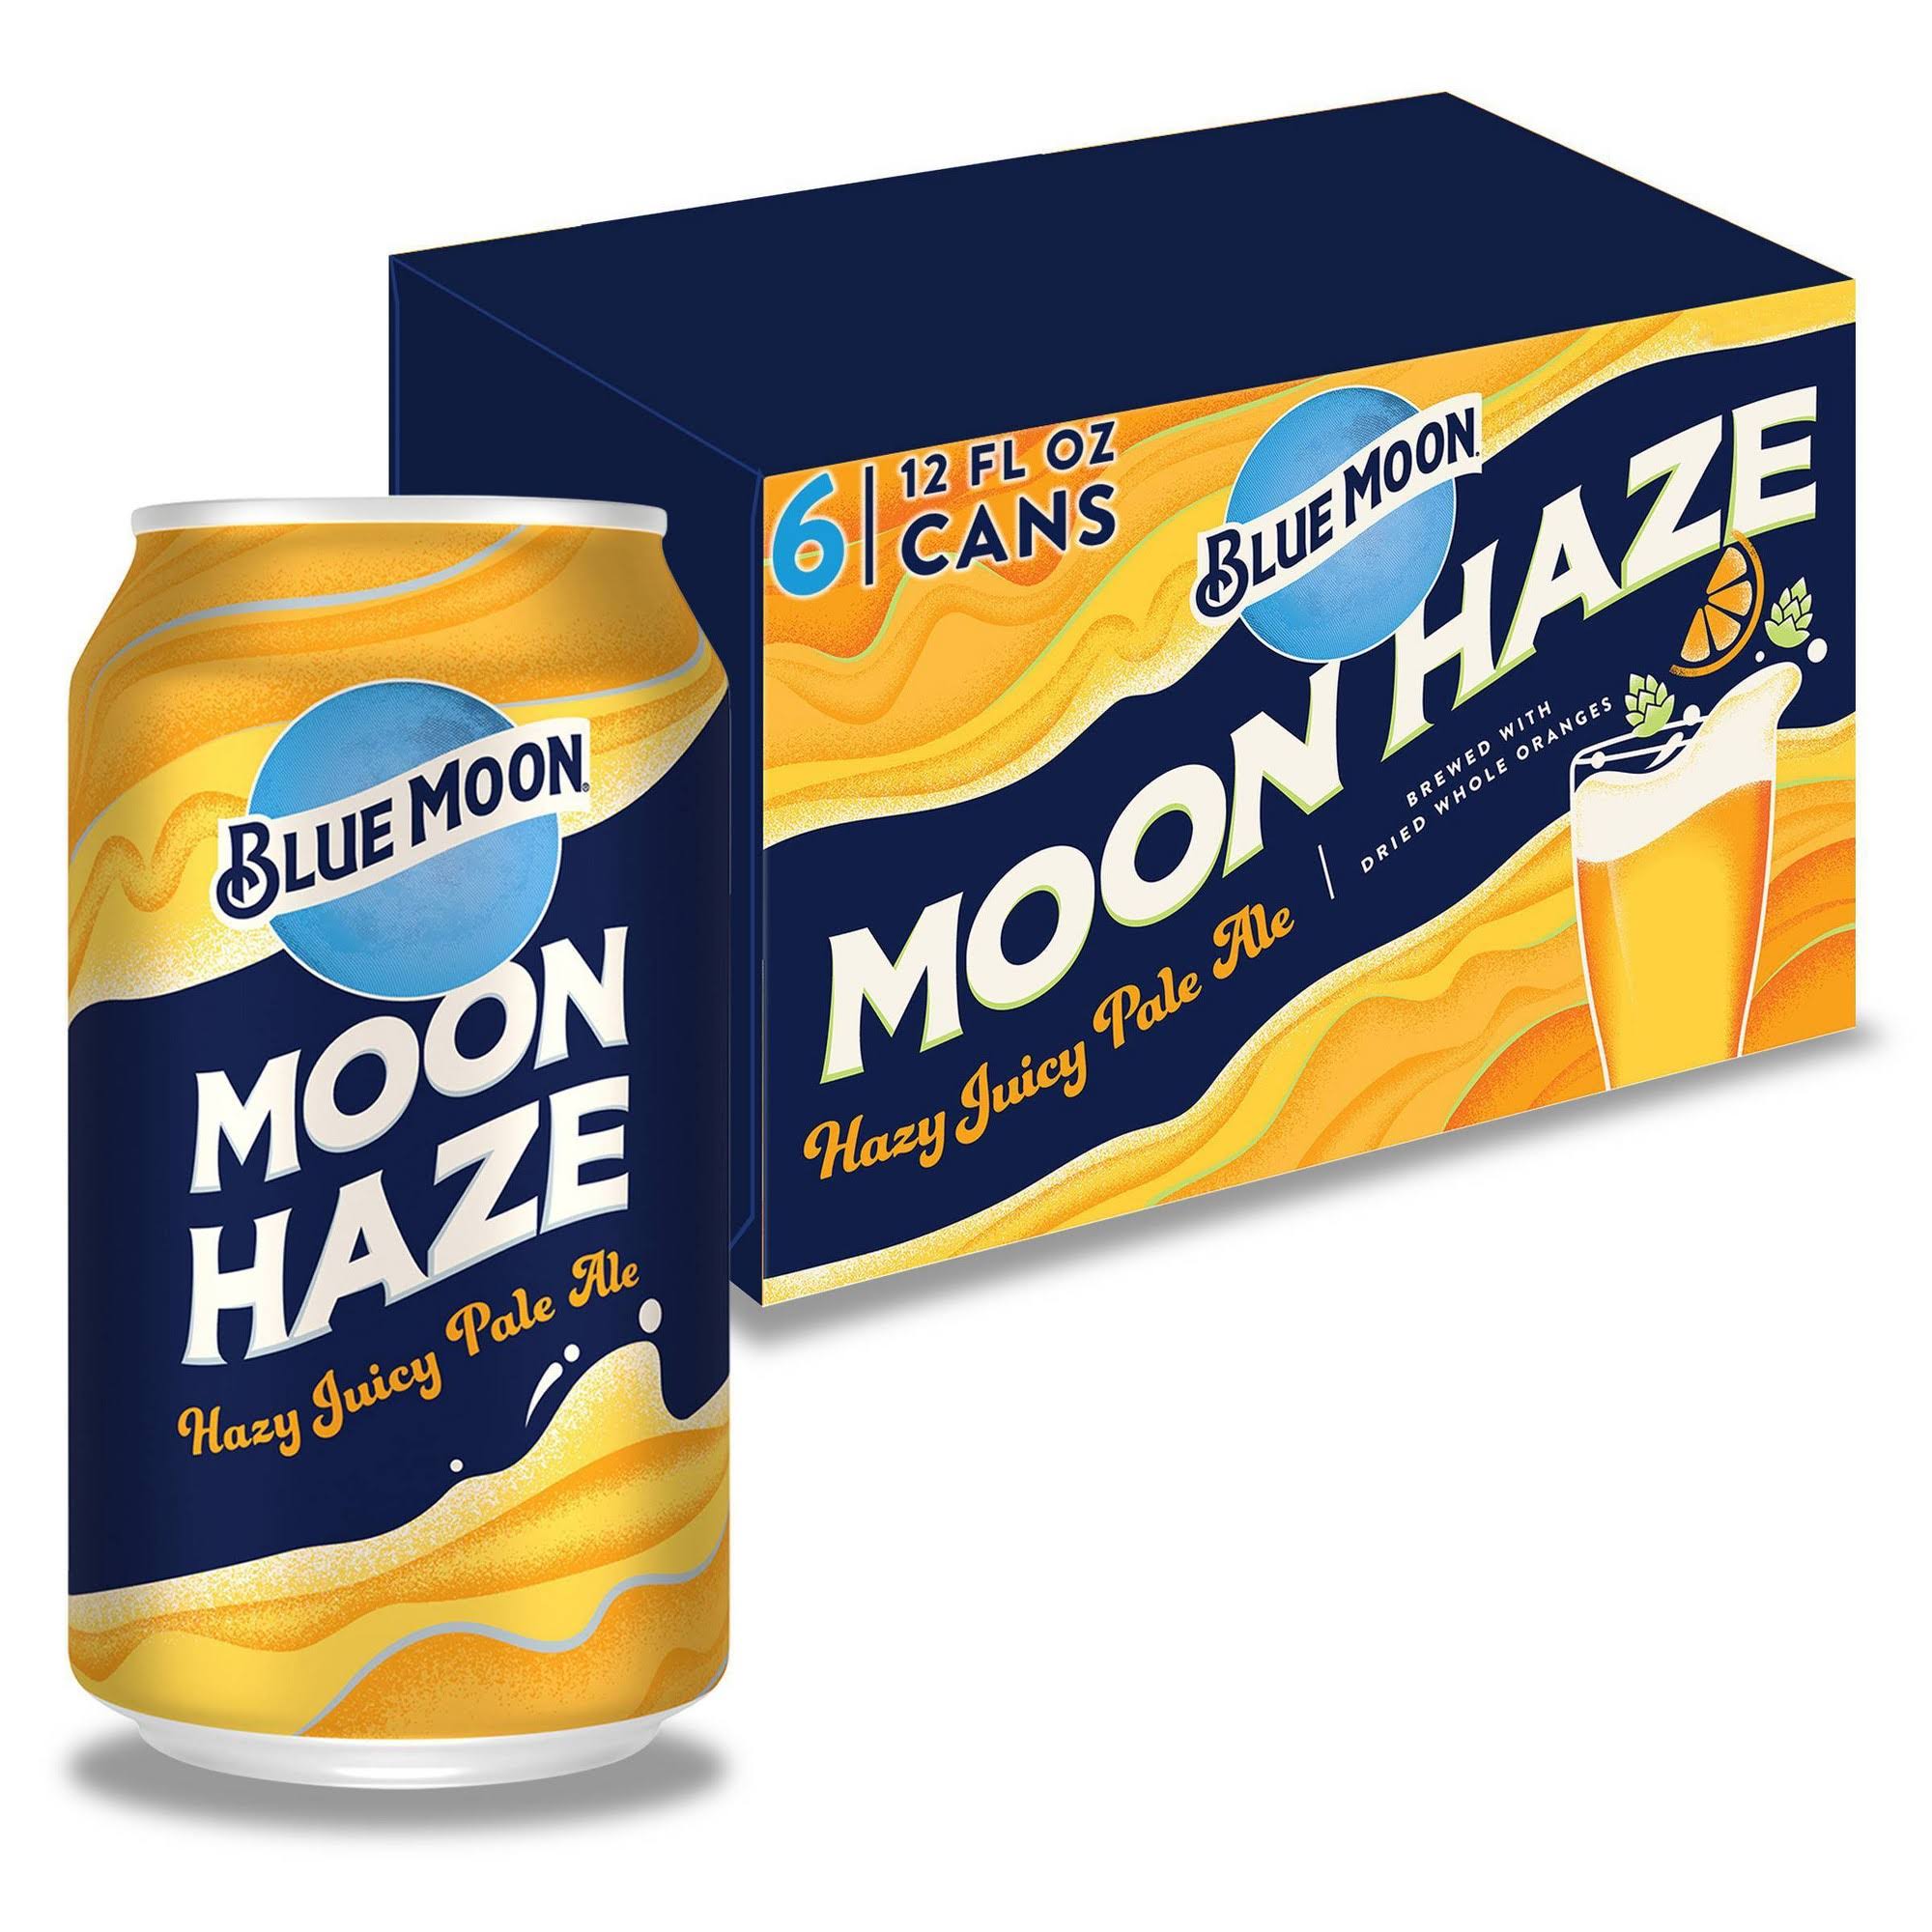 Blue Moon Beer, Hazy Juicy Pale Ale, Moon Haze - 6 pack, 12 oz cans